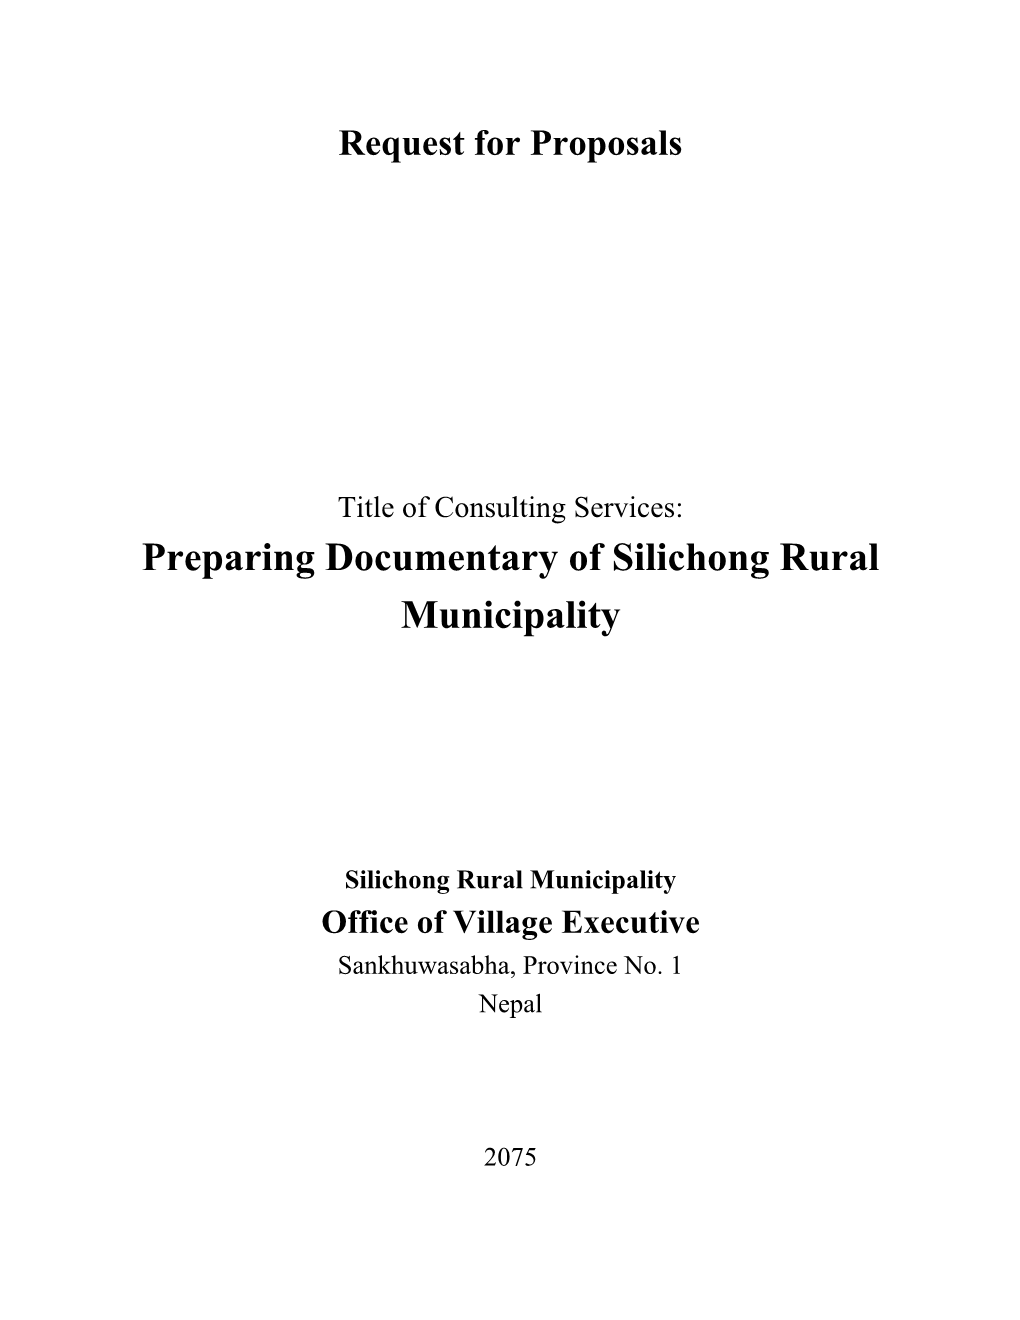 Preparing Documentary of Silichong Rural Municipality